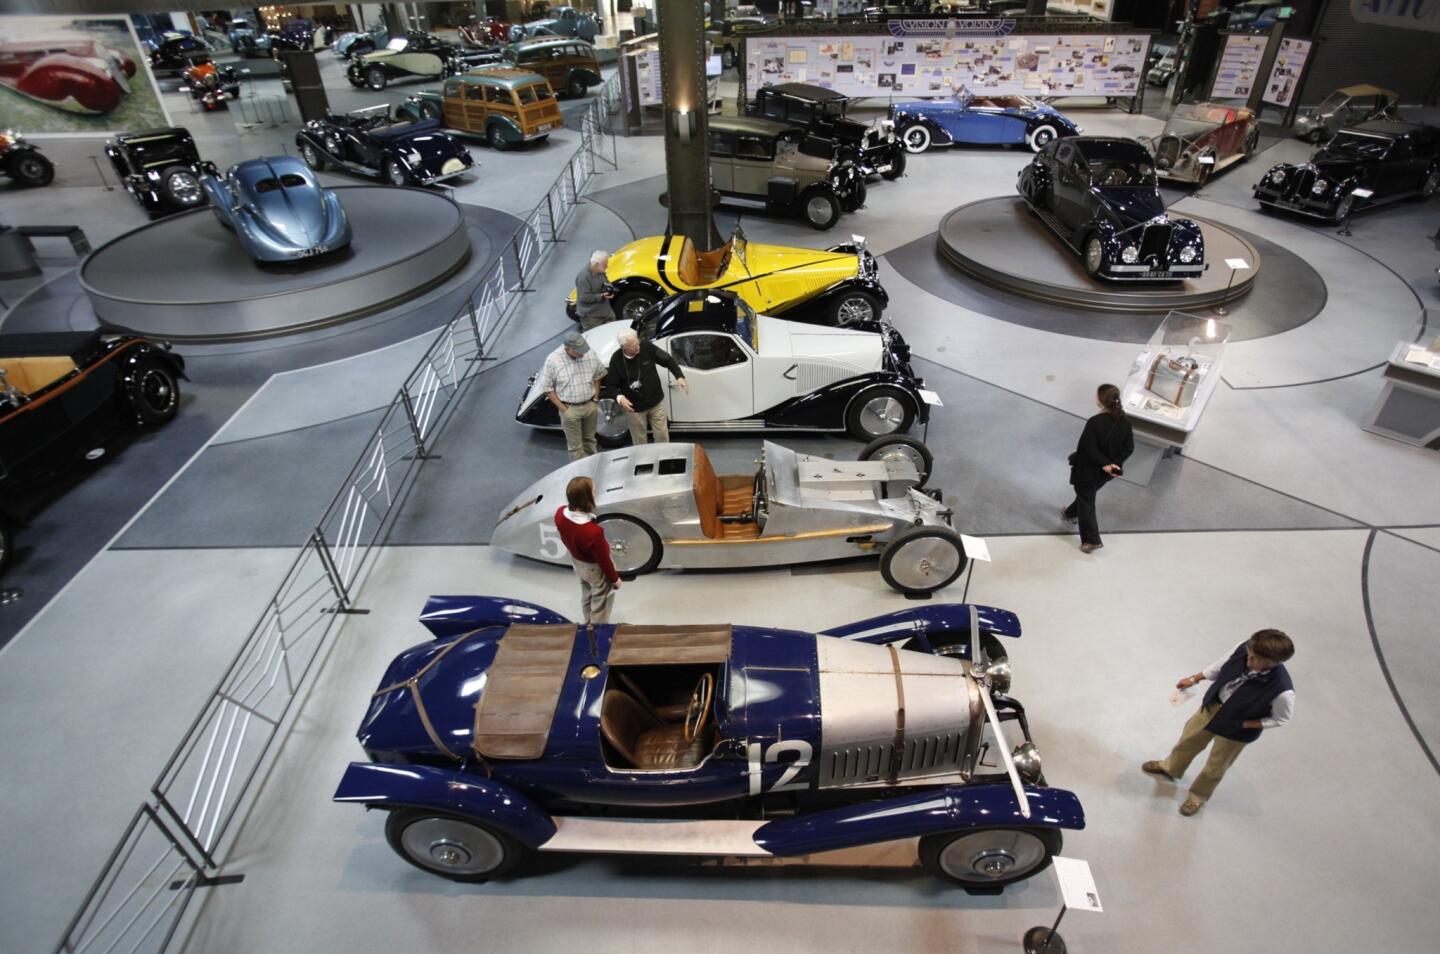 Voisin Cars at the Mullin Automotive Museum